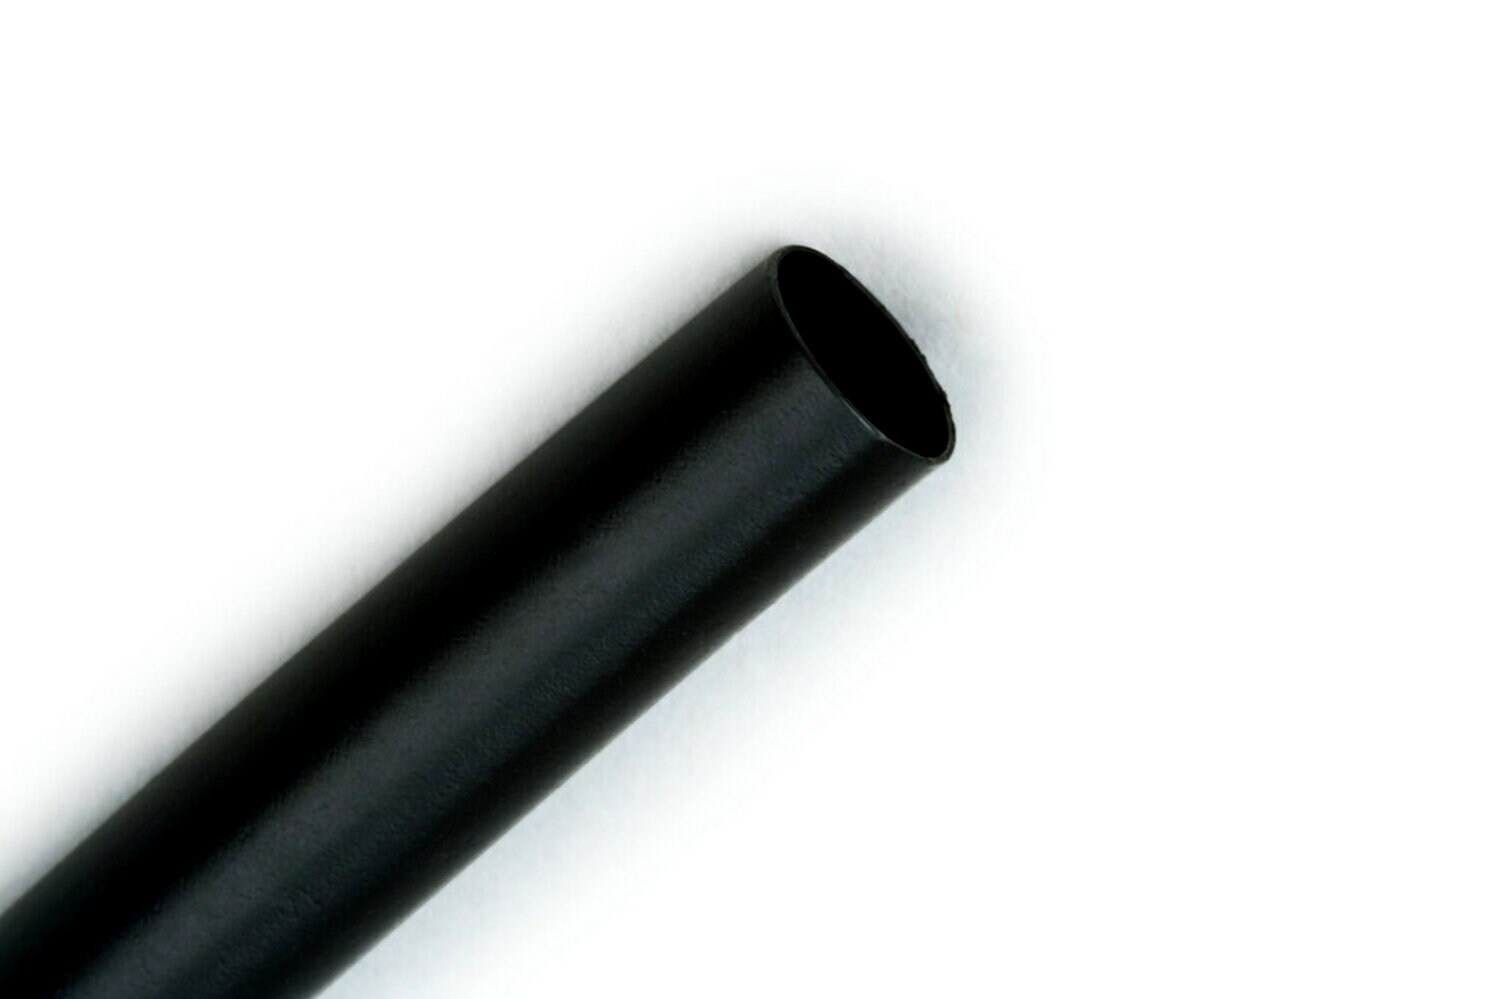 7010396208 - 3M Heat Shrink Thin-Wall Tubing FP-301VW 3/32-Black-500', 500 ft Length
per spool, 3 Rolls/Case